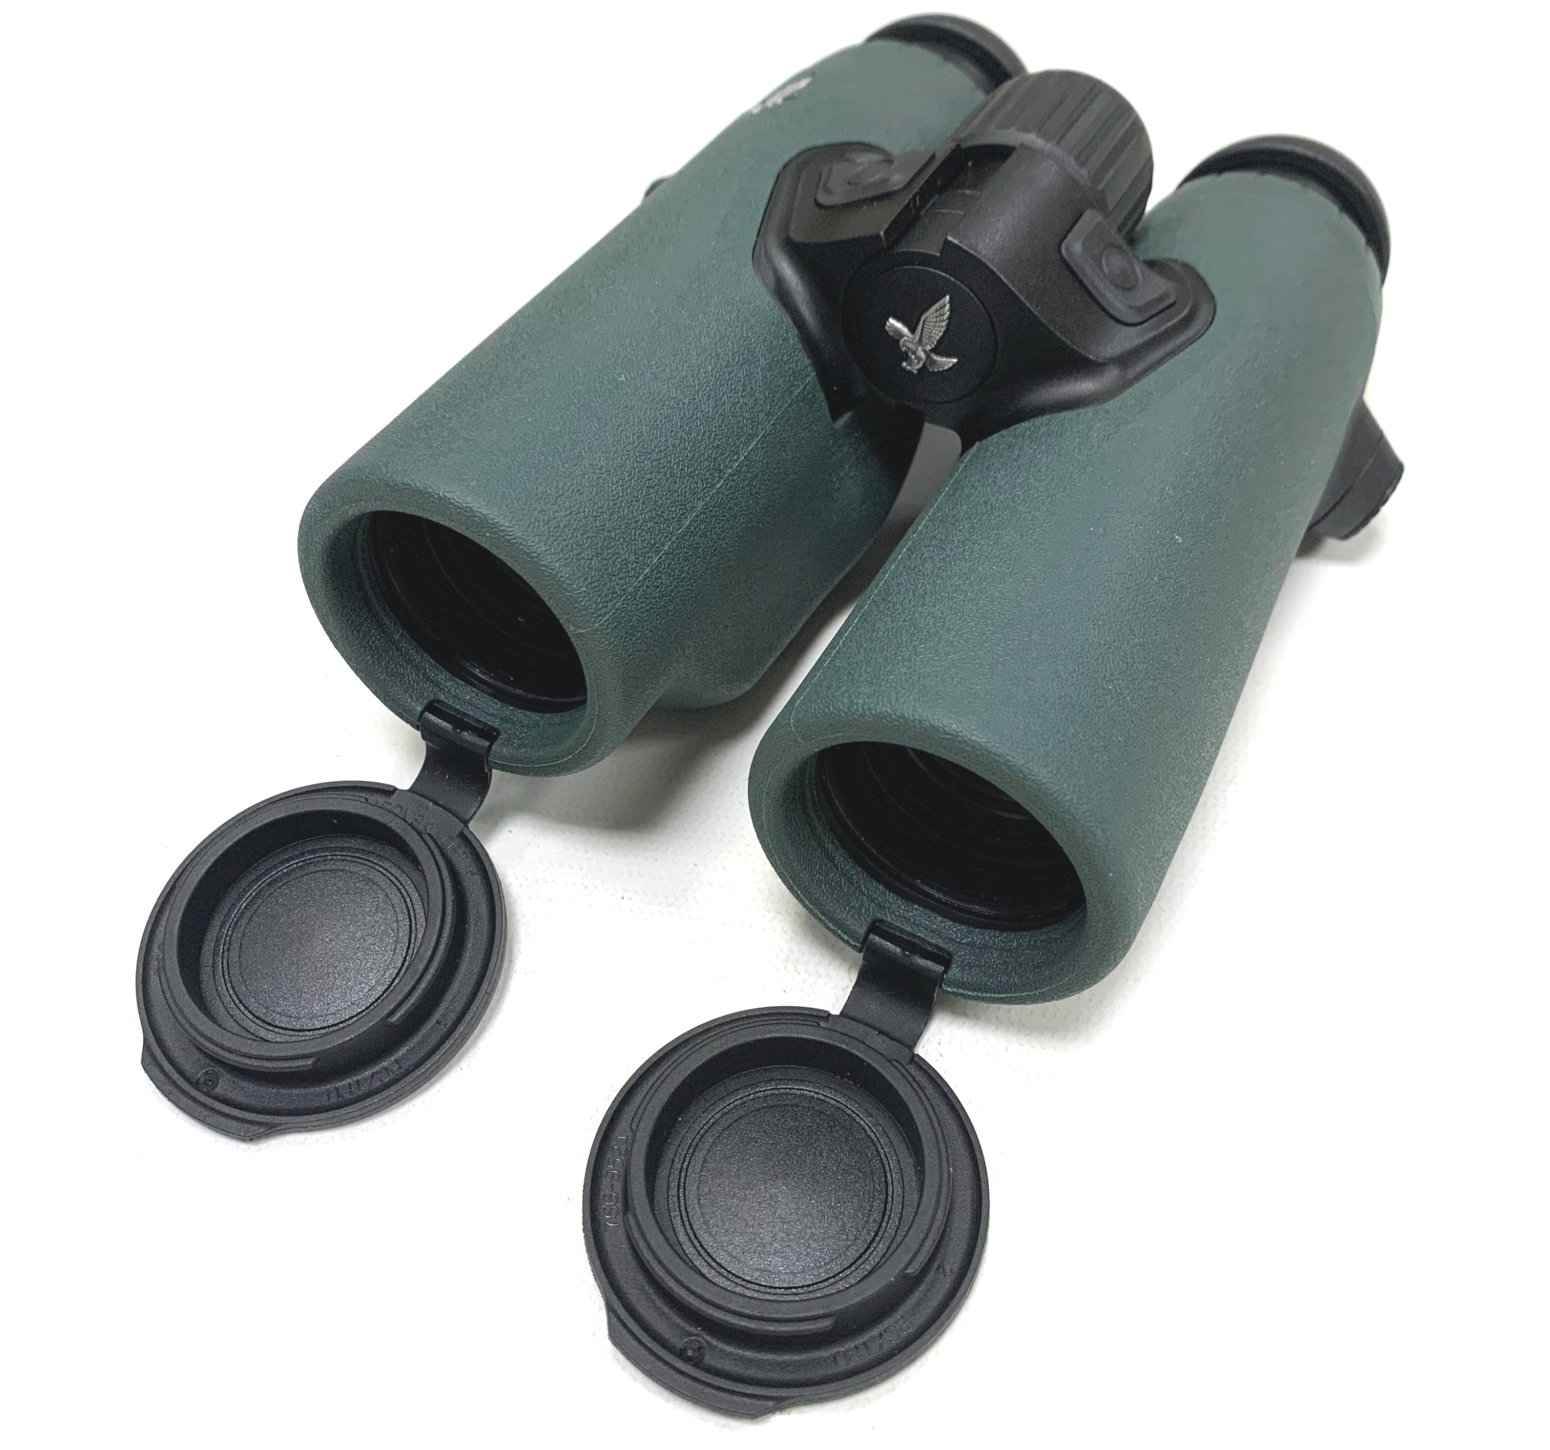 swarovski 8x32 el range finding binoculars